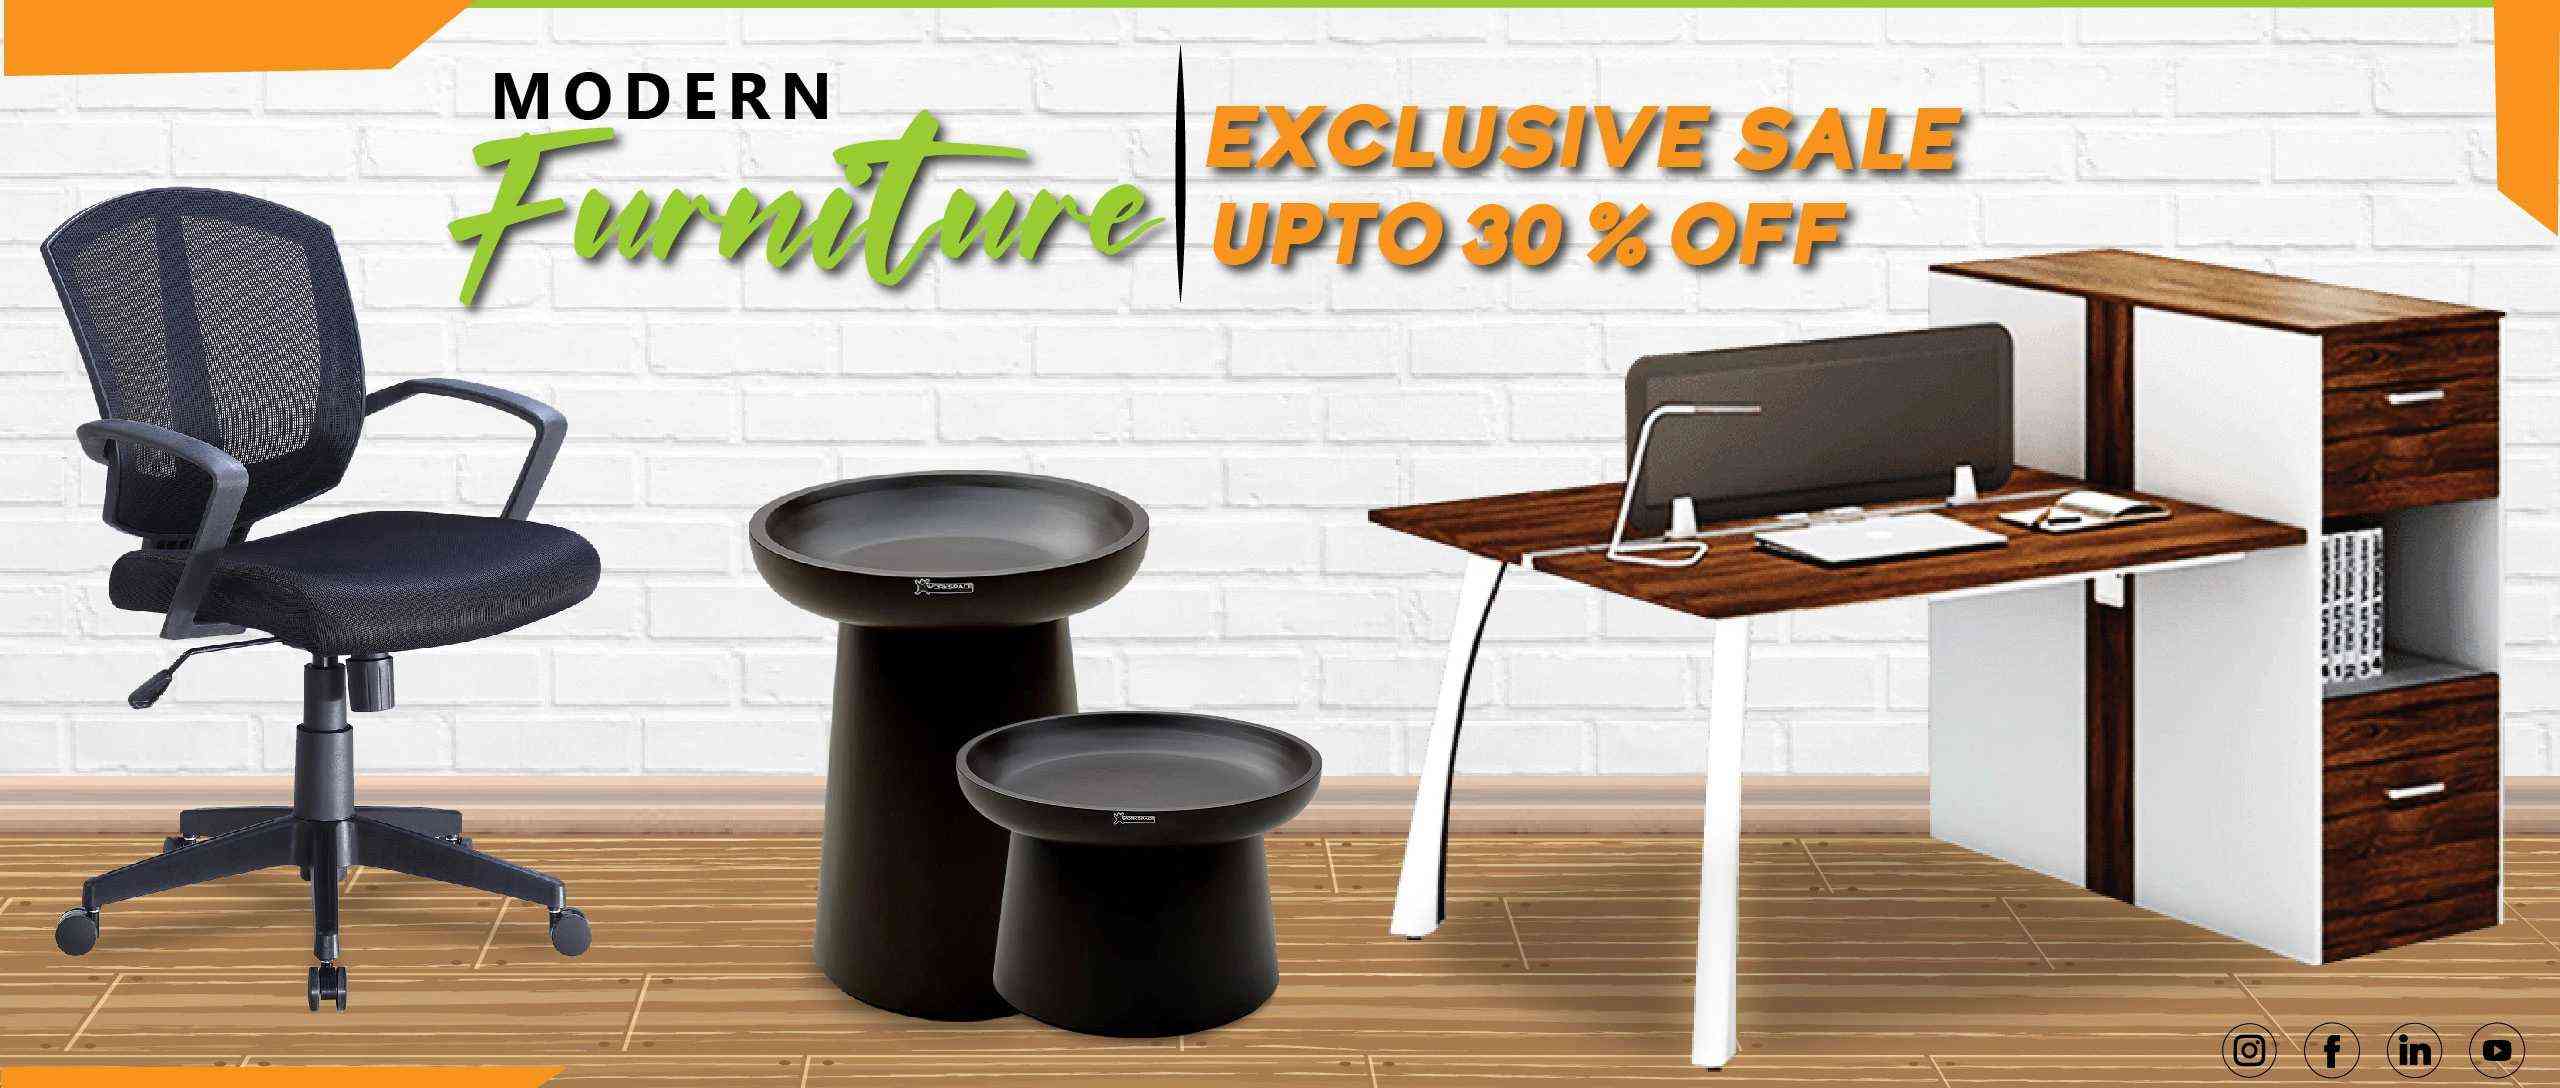 Modern Furniture Exclusive Sale